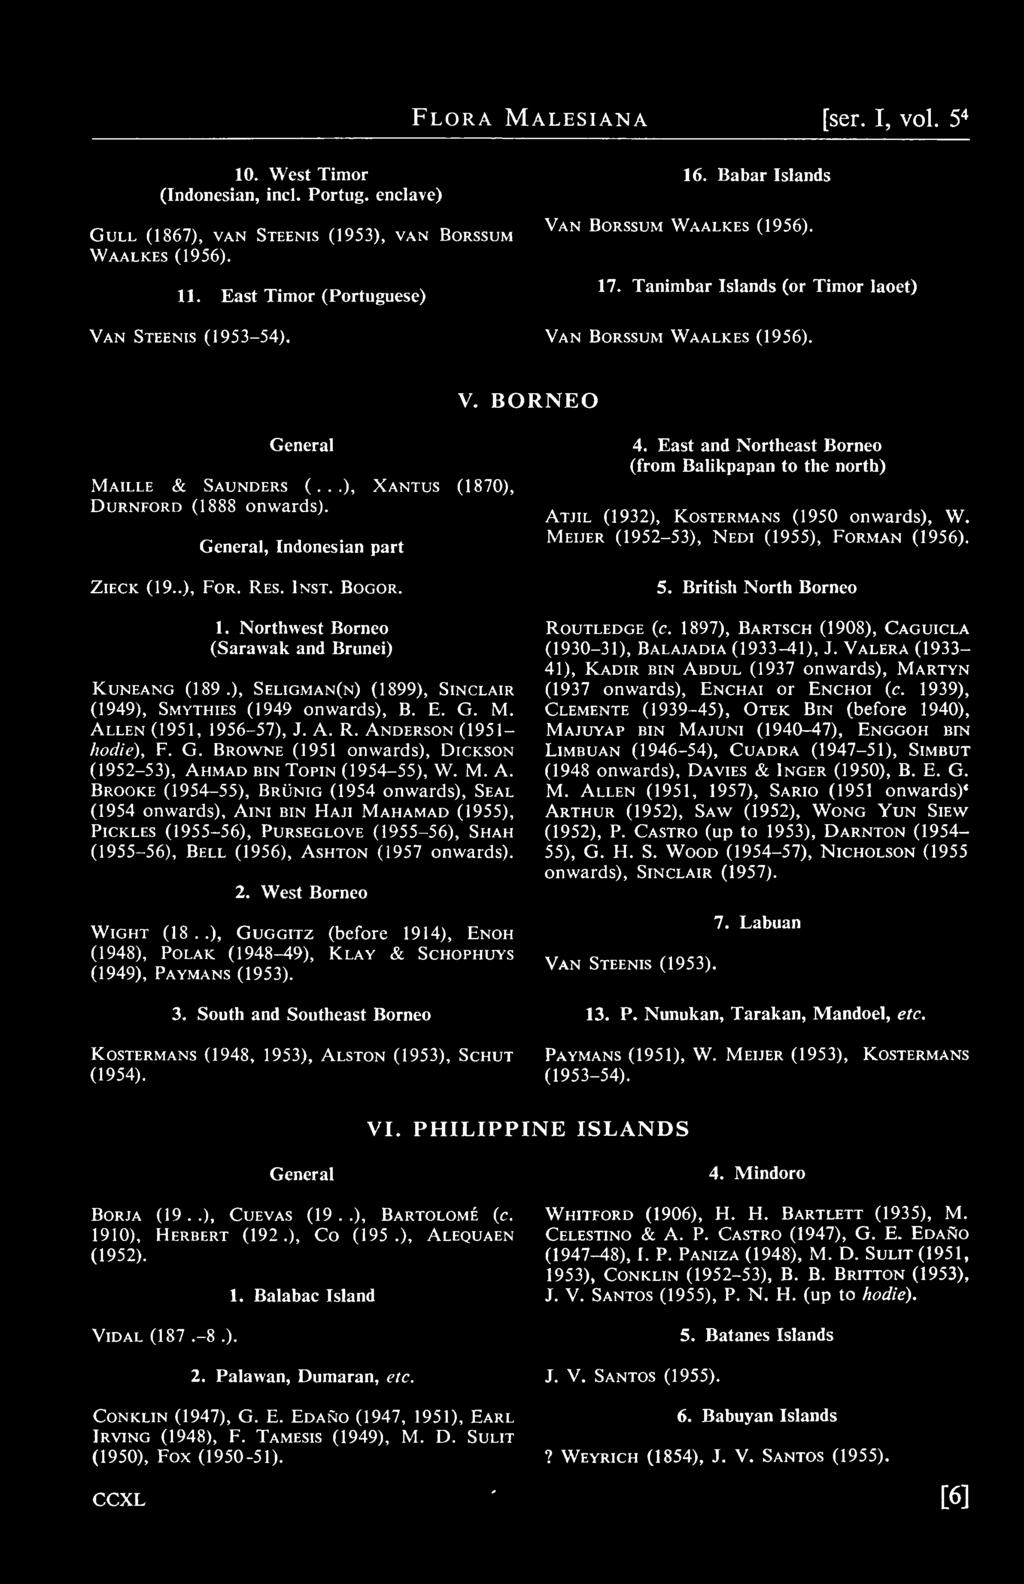 V. BORNEO General Maille & Saunders (...), Xantus (1870), DURNFORD (1888 onwards). ZiECK (19..), General, Indonesian part For. Res. Inst. Bogor. 1. Northwest Borneo (Sarawak and Brunei) Kuneang (189.